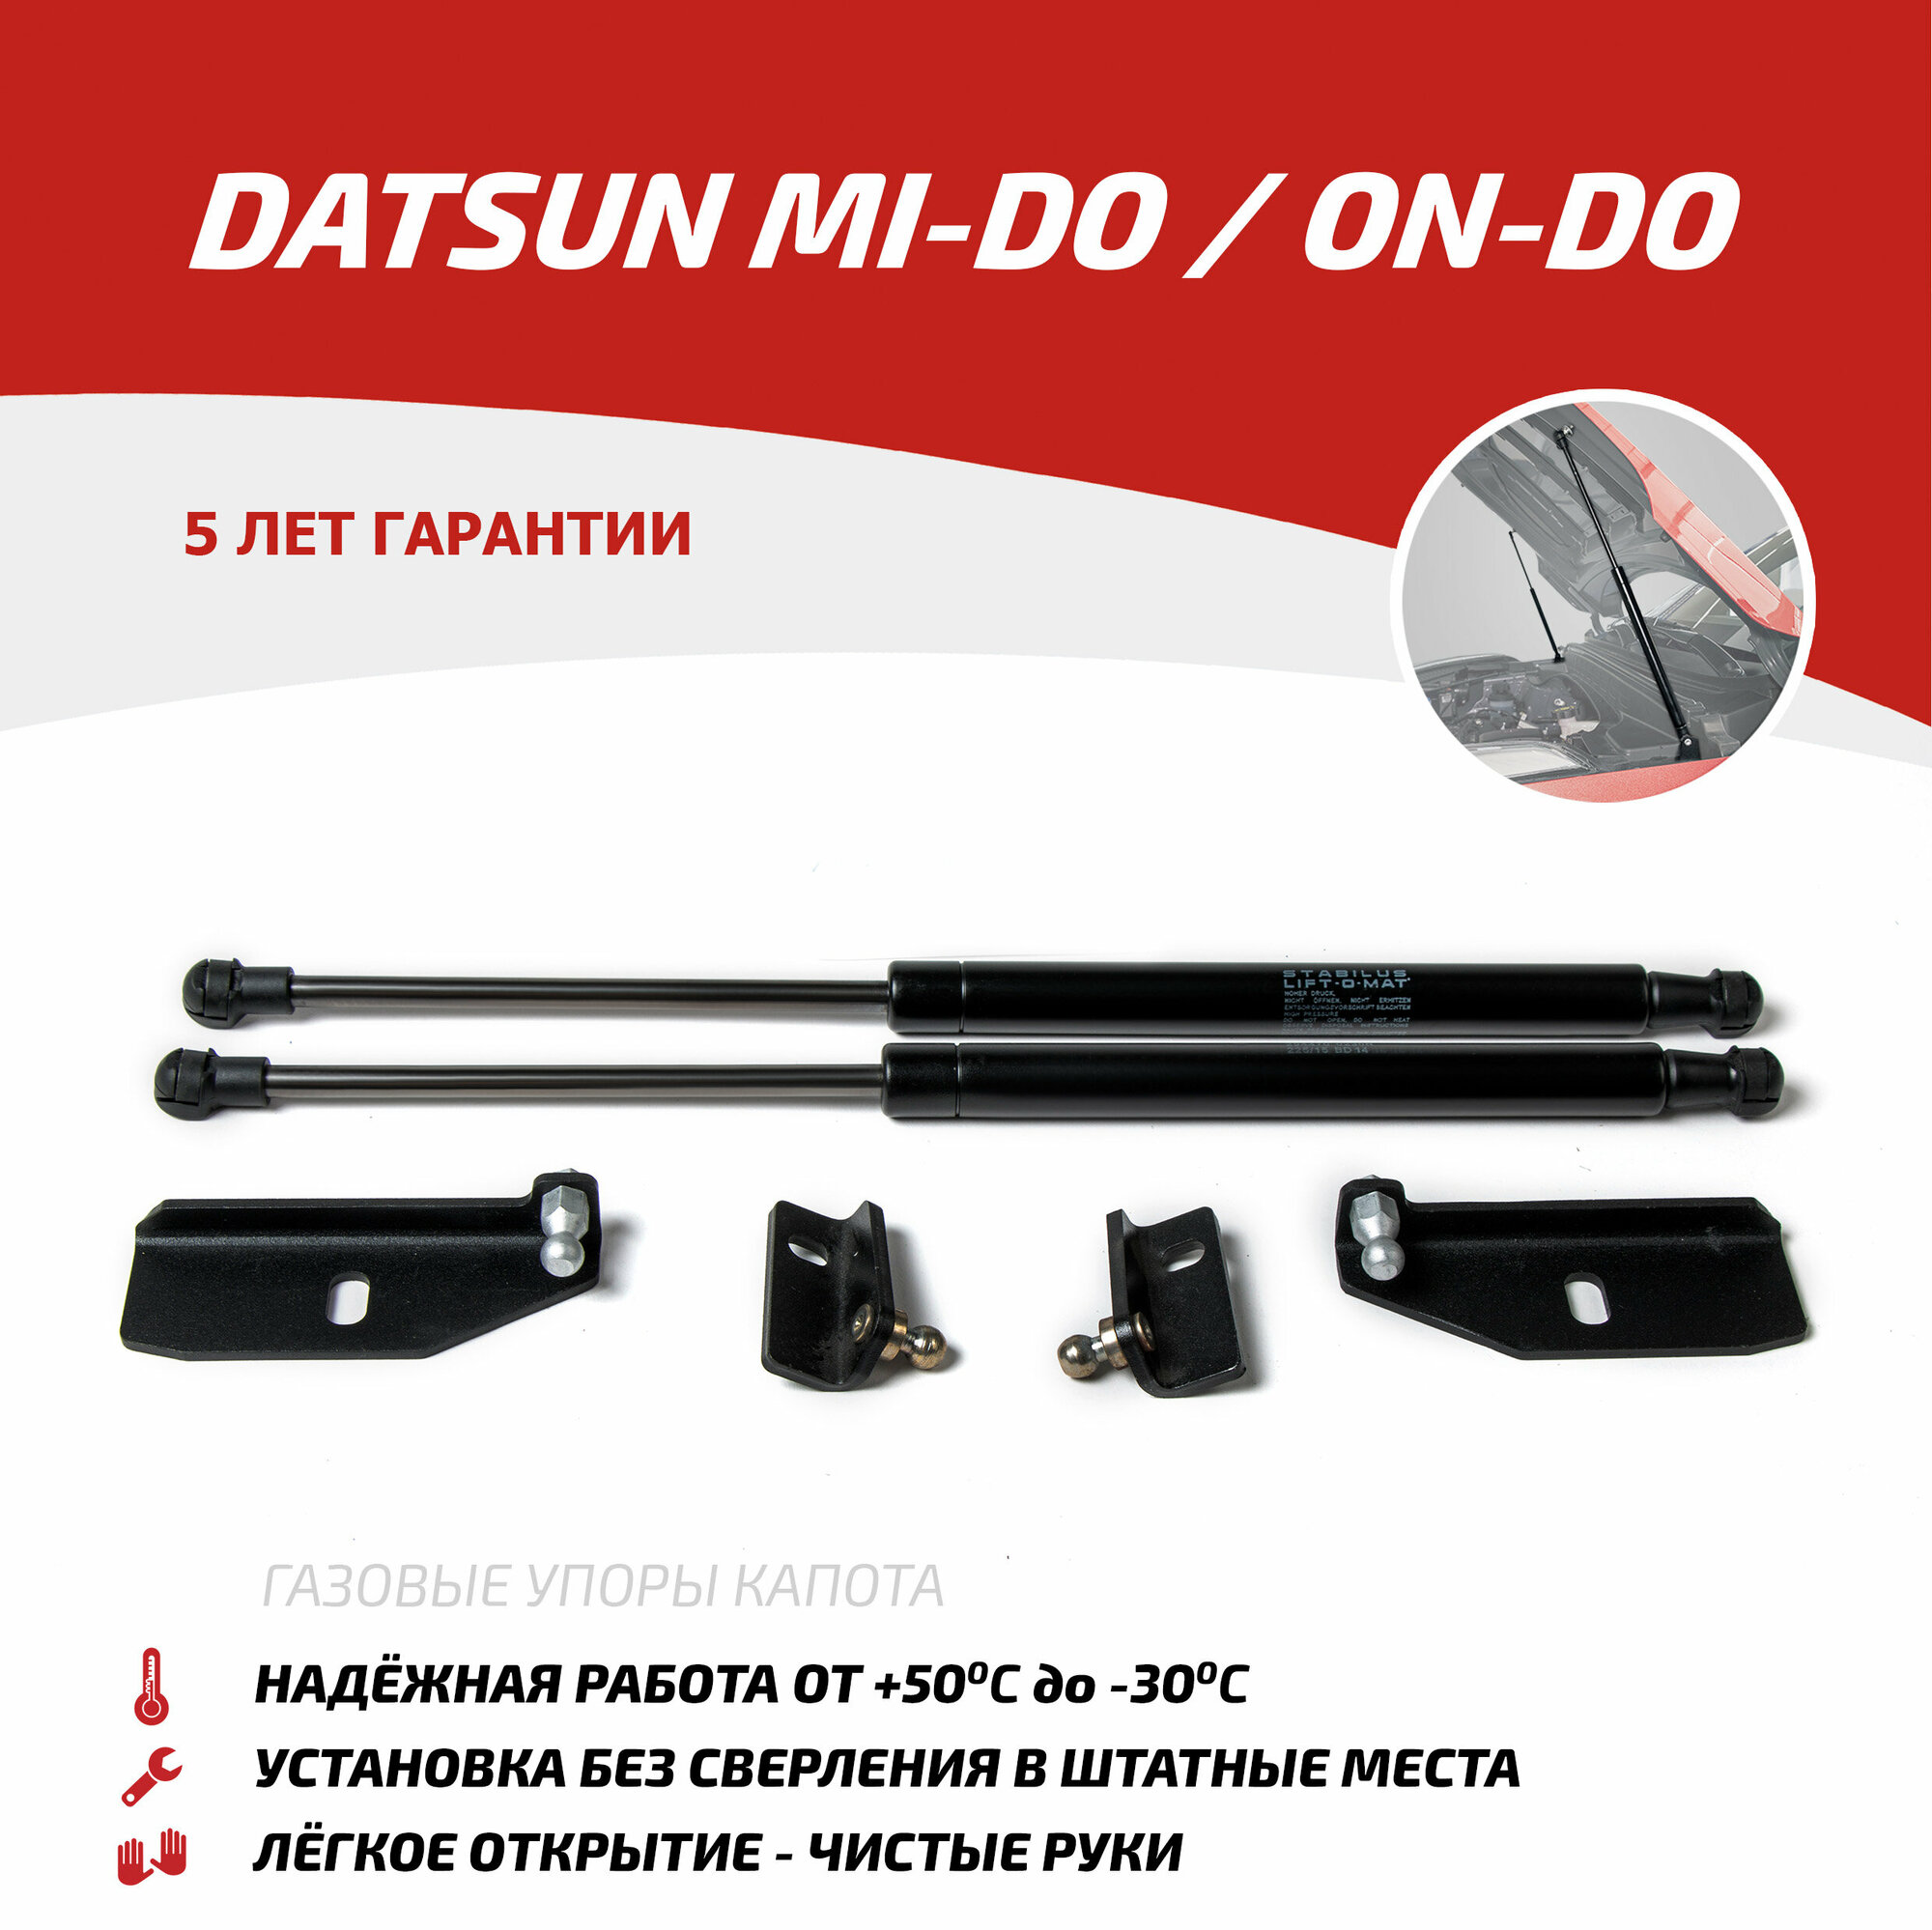 Амортизатор капота передний Автоупор UDAOND/MID012 для Datsun mi-DO Datsun on-DO